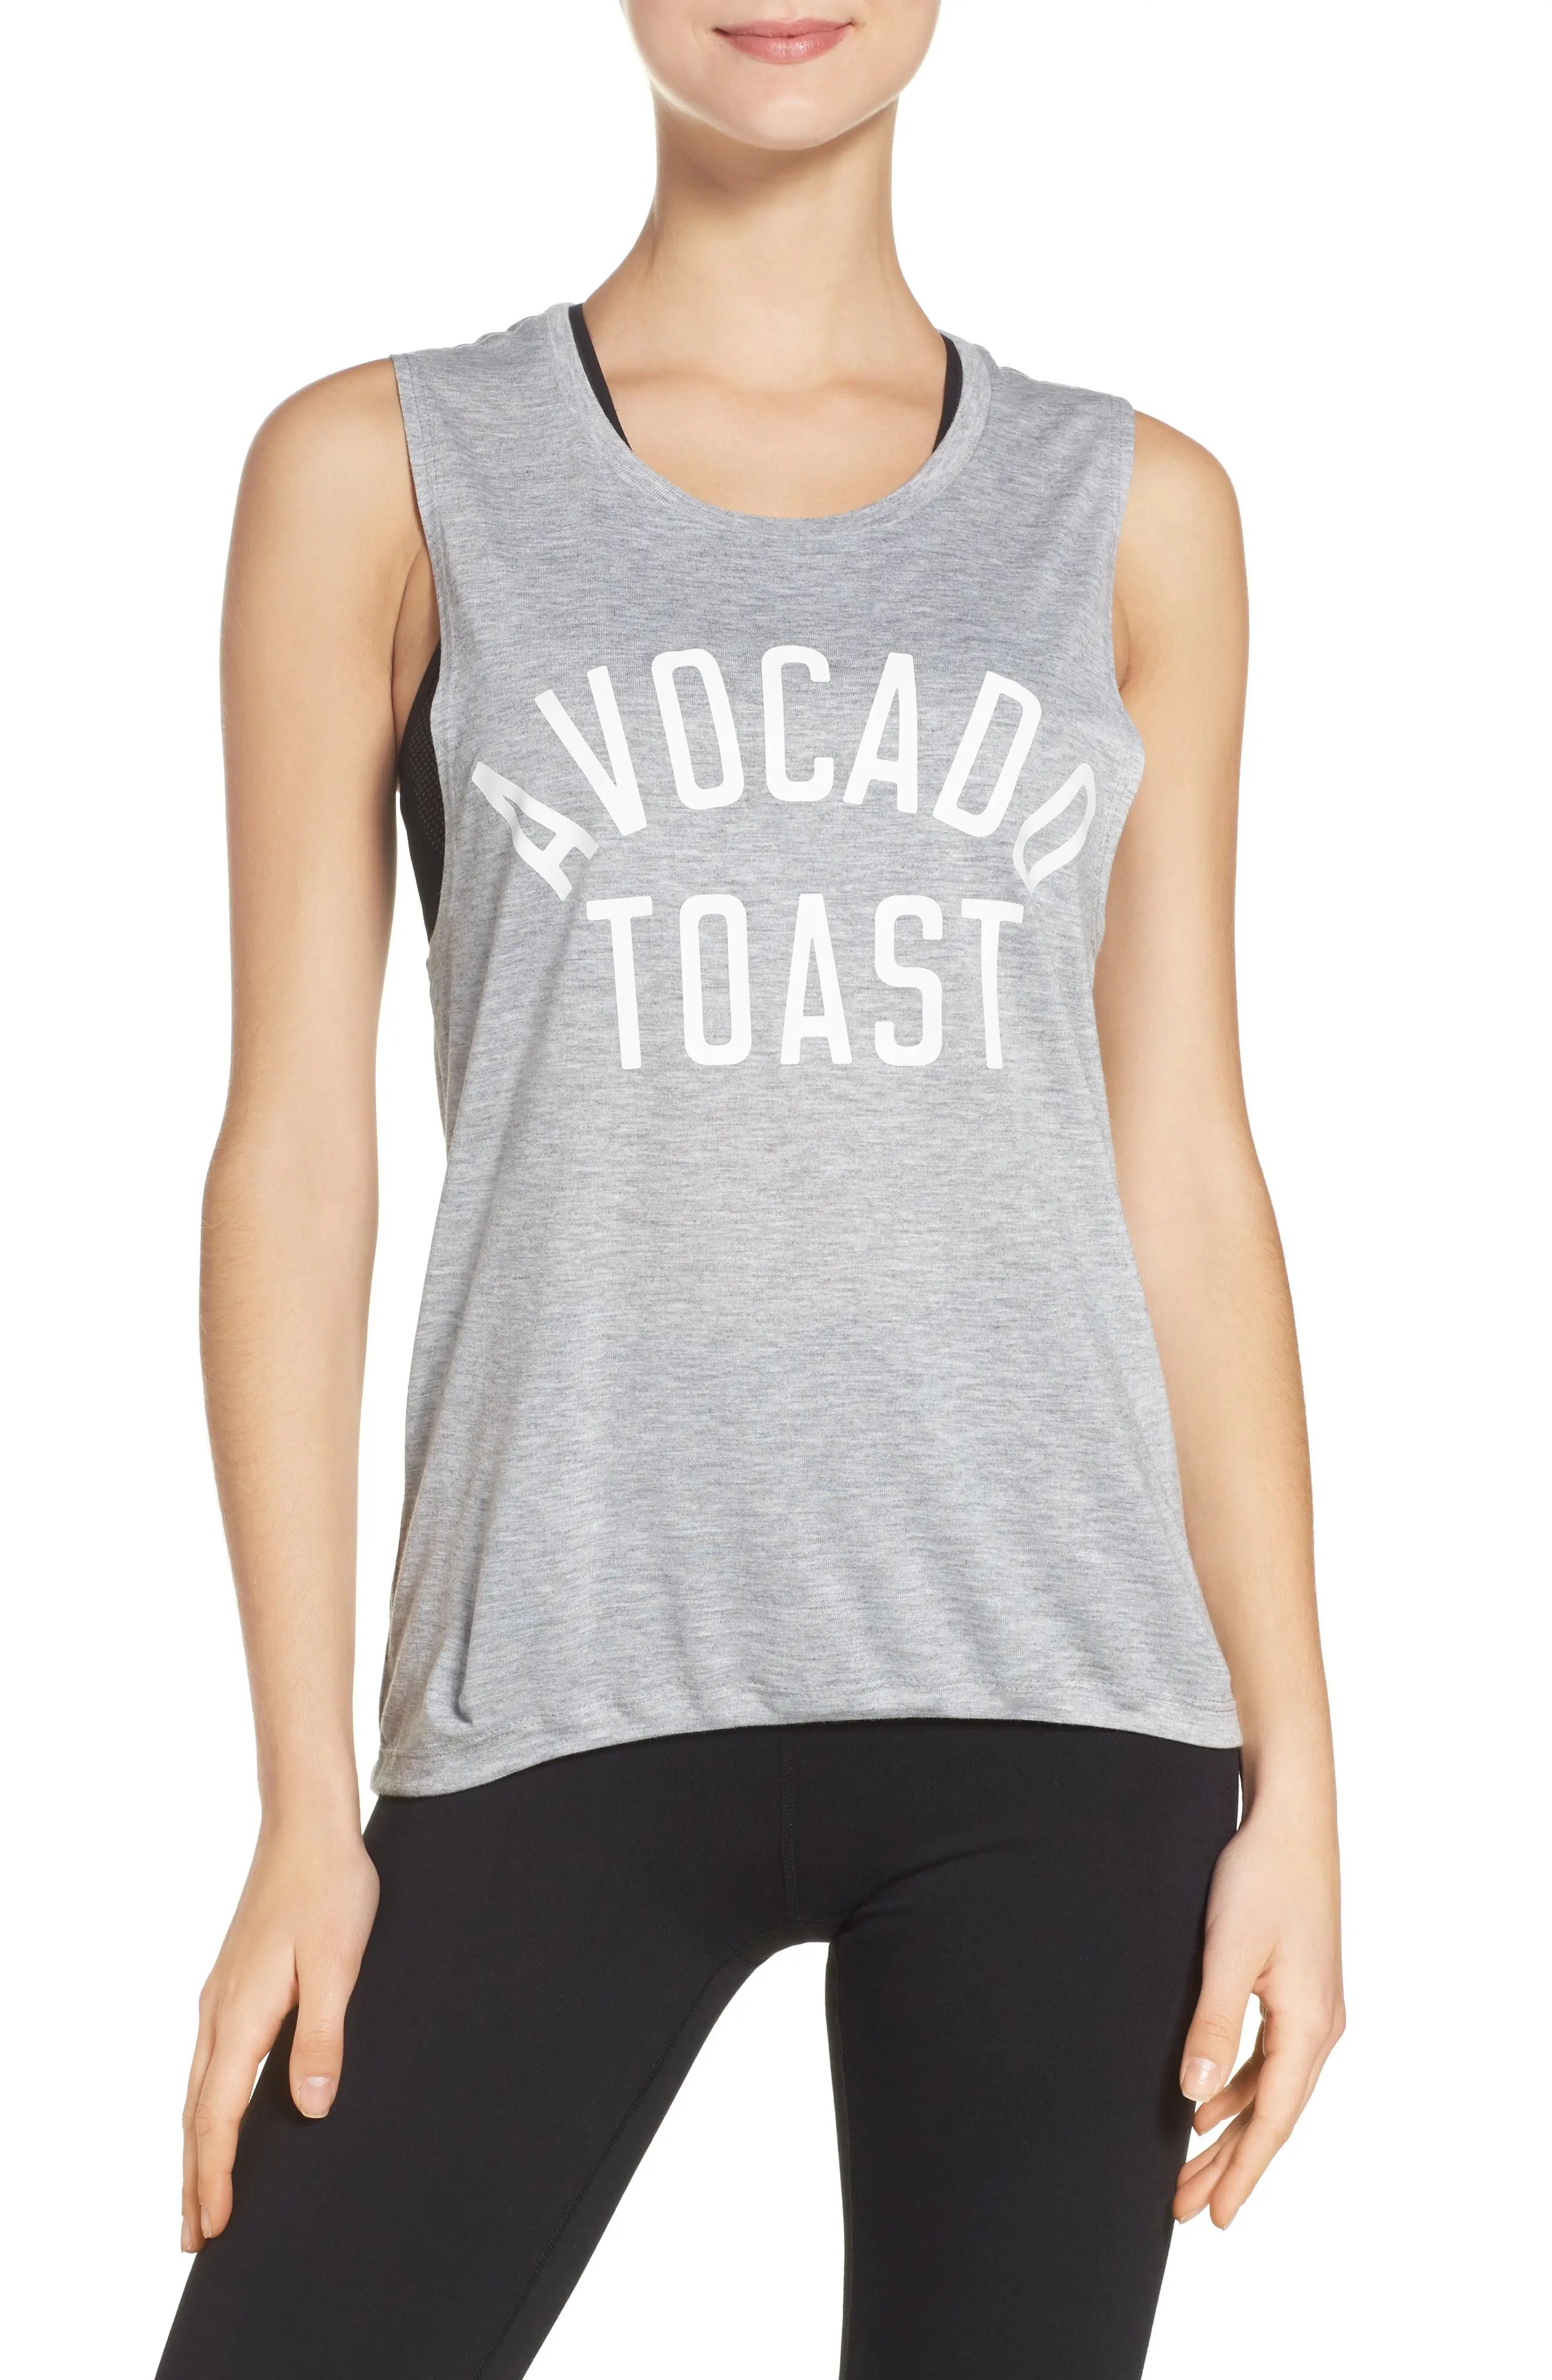 Avocado Toast Tank | Nordstrom